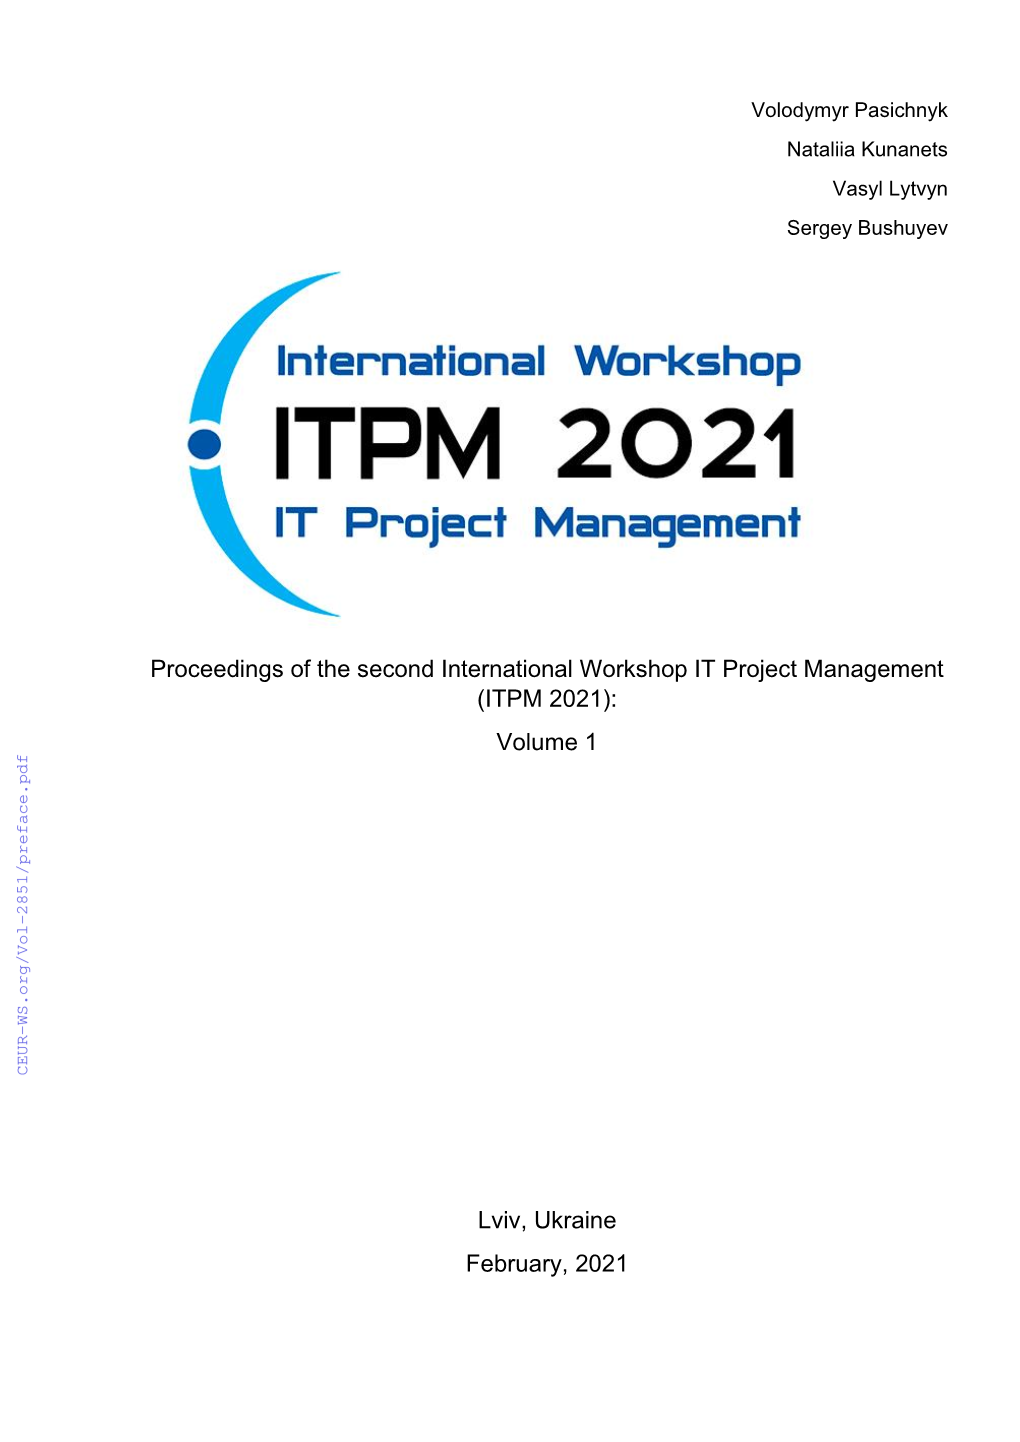 ITPM 2021): Volume 1